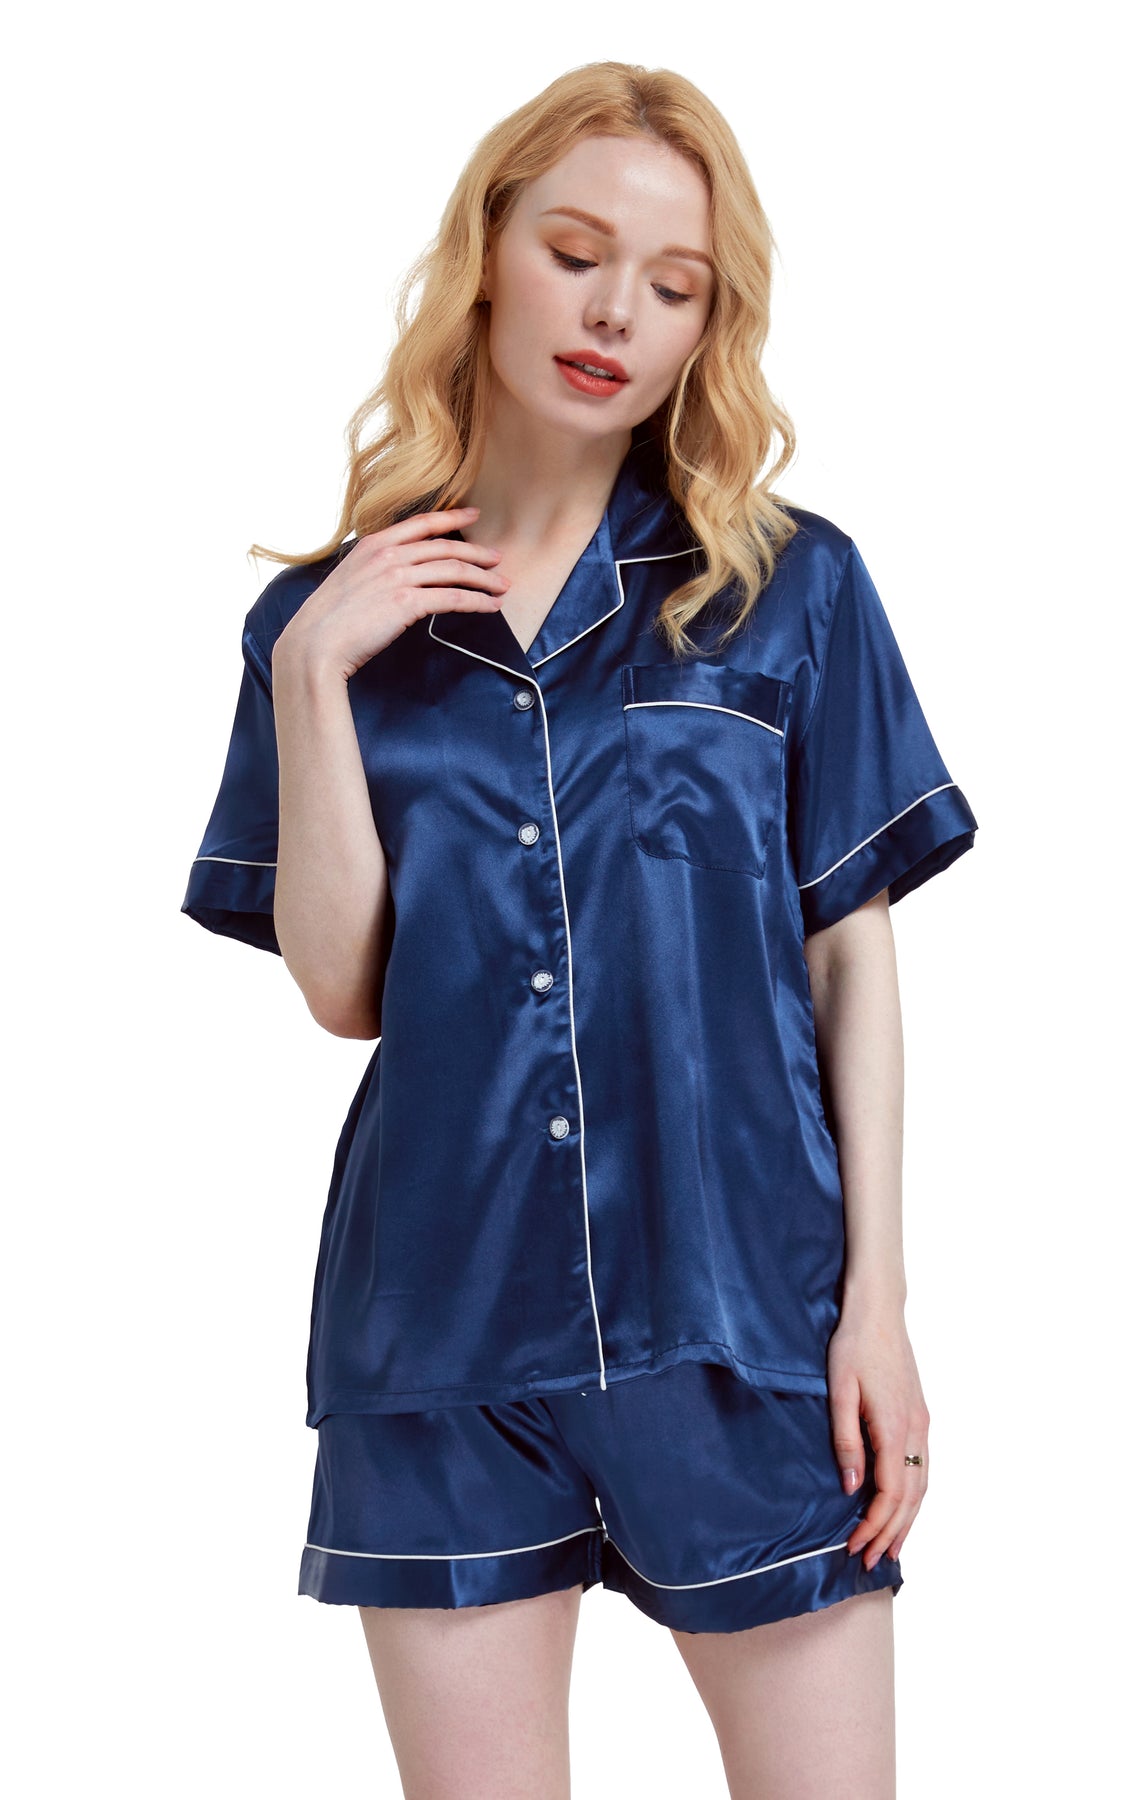 Womens Silk Satin Pajama Set Short Sleeve Navy Blue With White Pipin Tony And Candice 